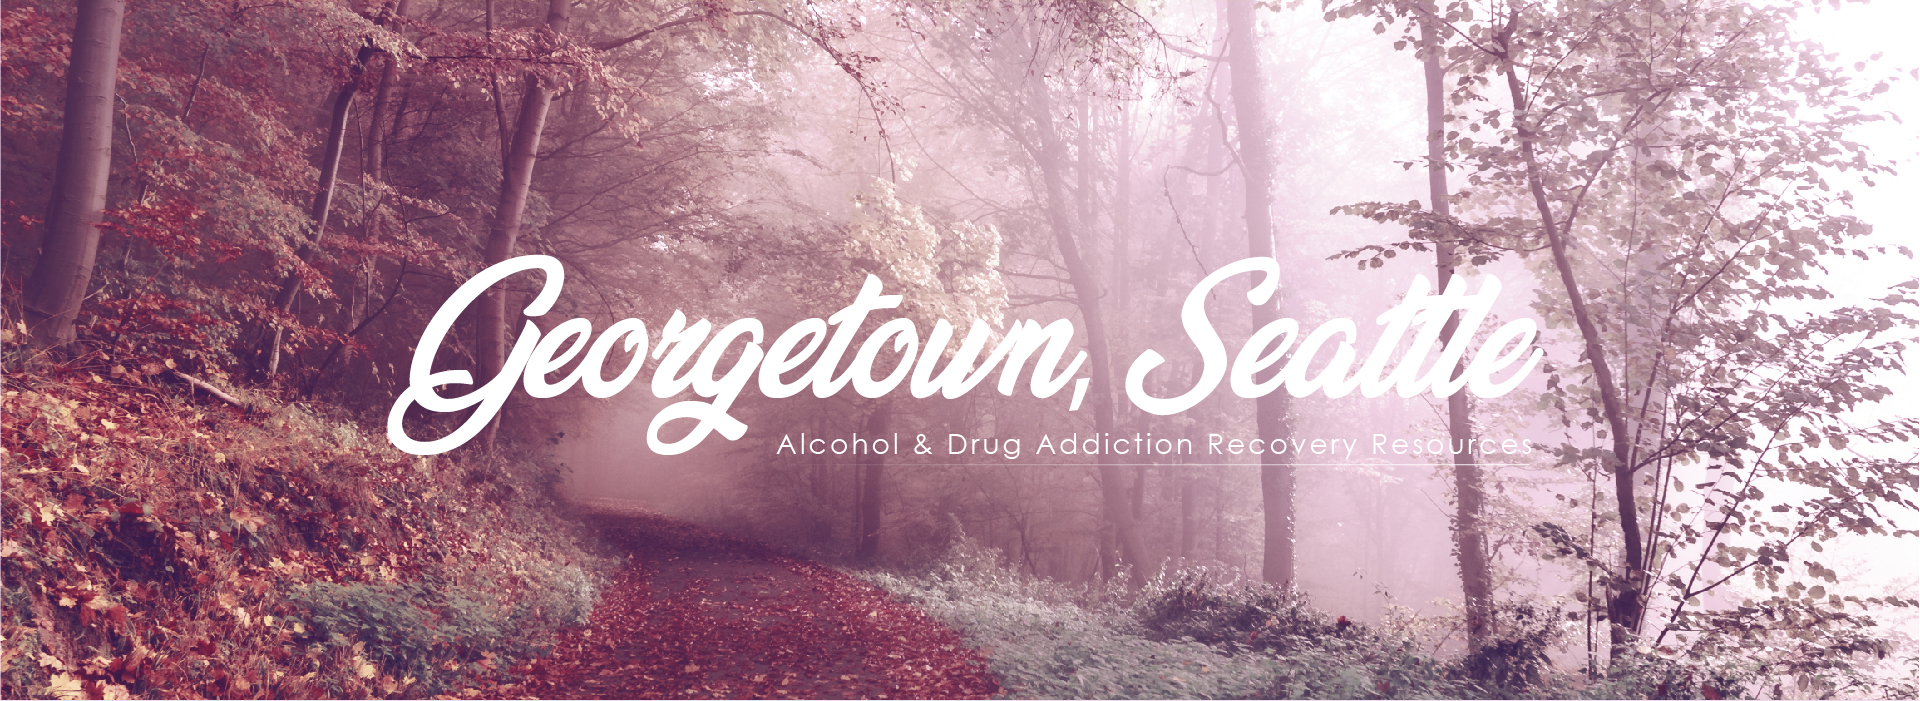 Georgetown, Washington addiction resources